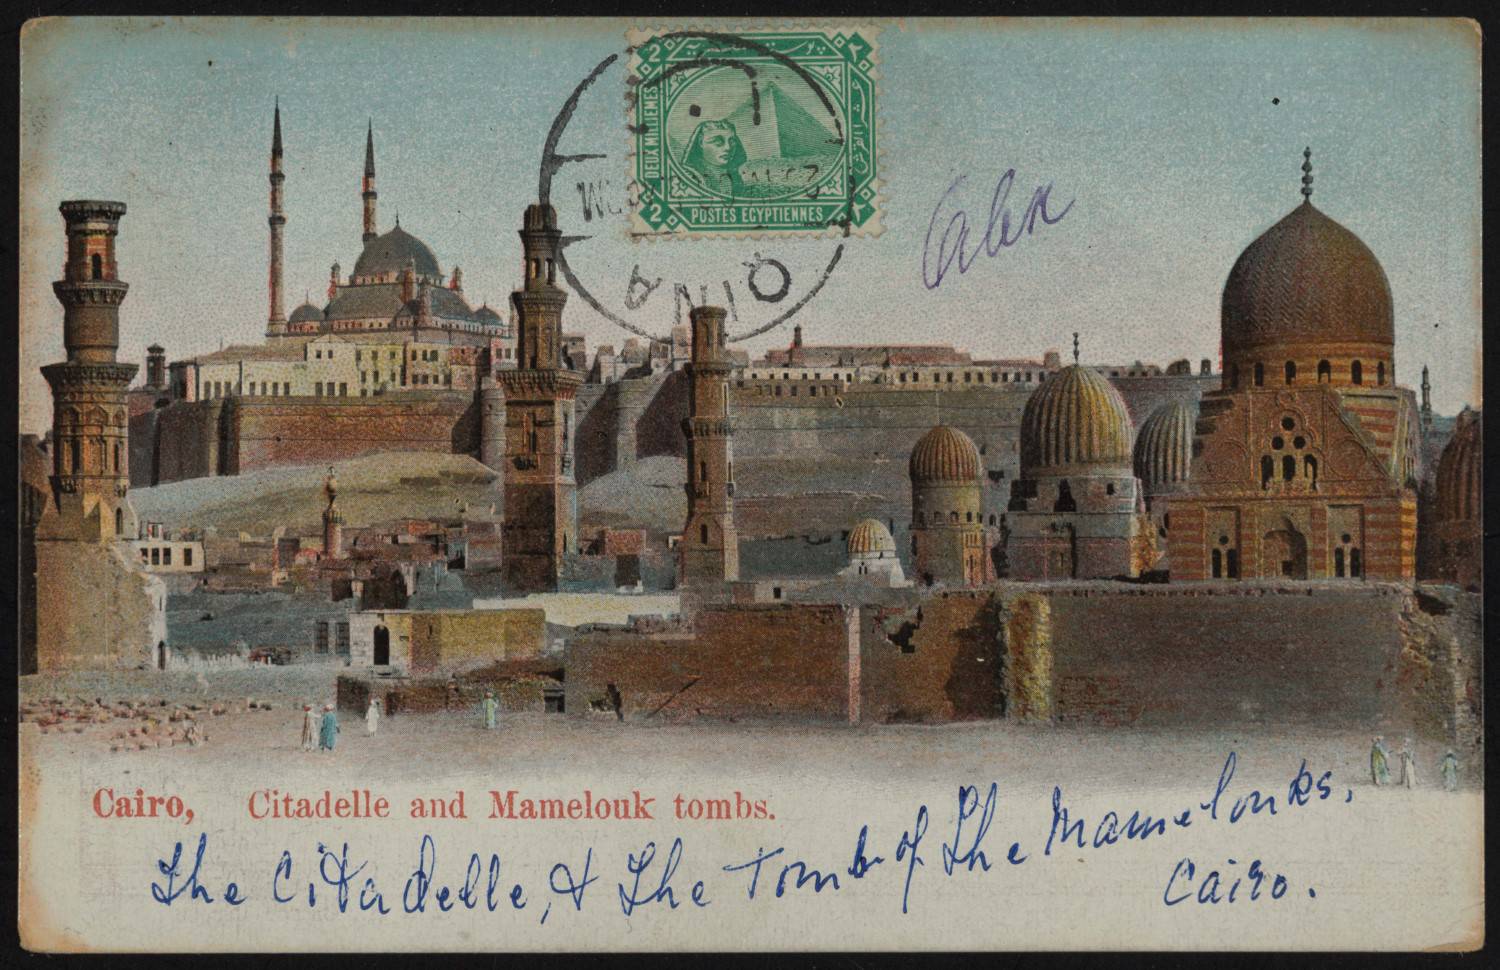 Postcard of citadel and tombs of Mamelouks [Mamluks]